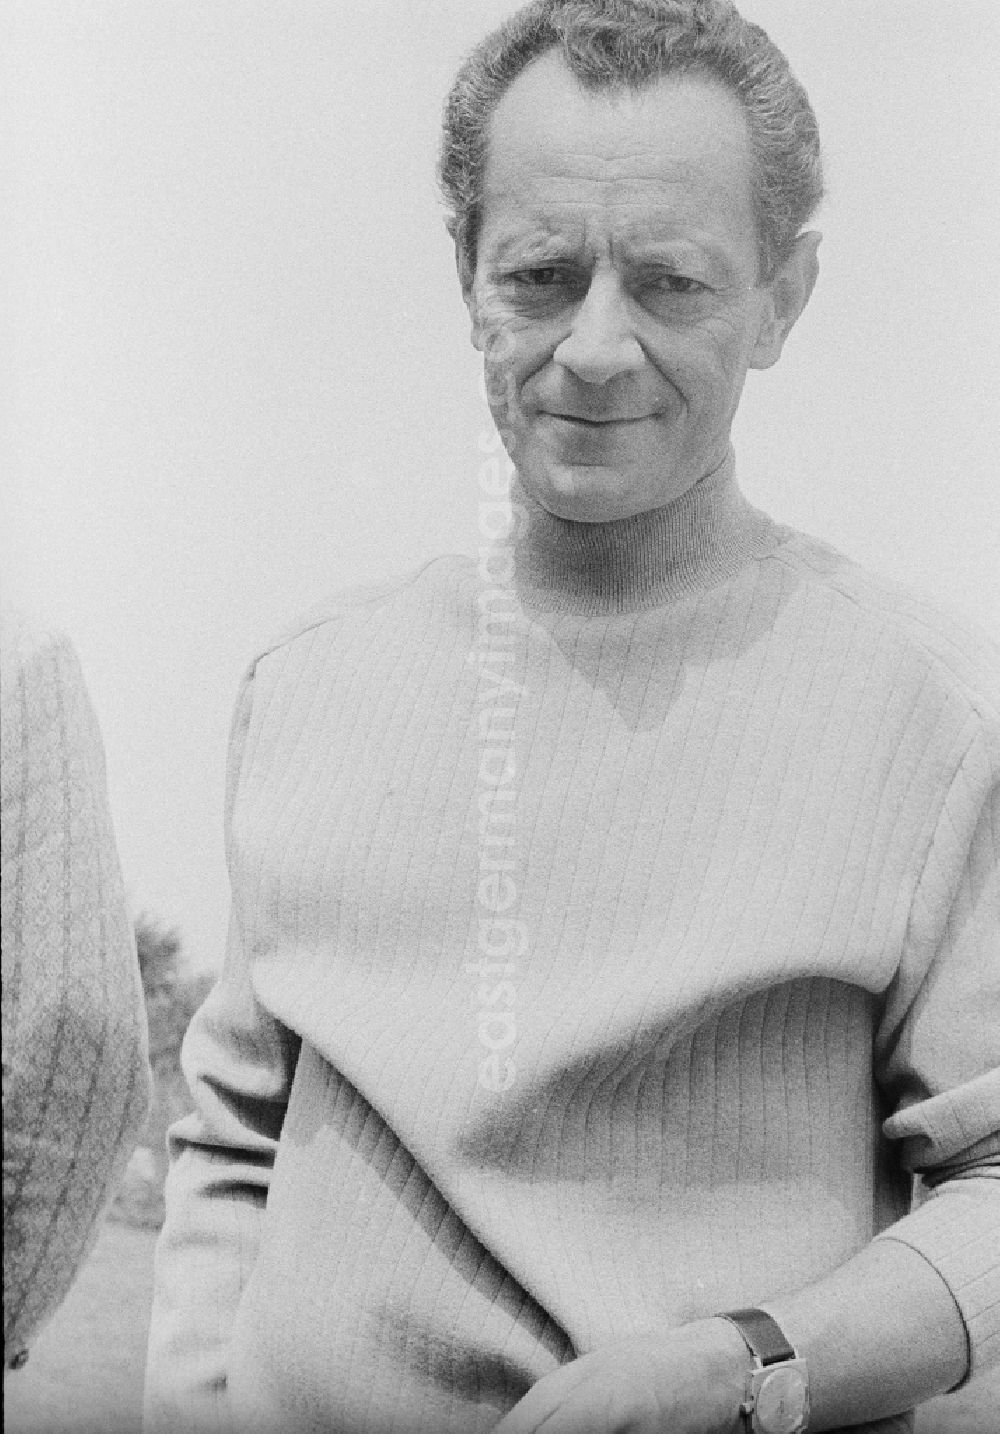 Zeuthen: The author Dieter Noll (1927 - 20